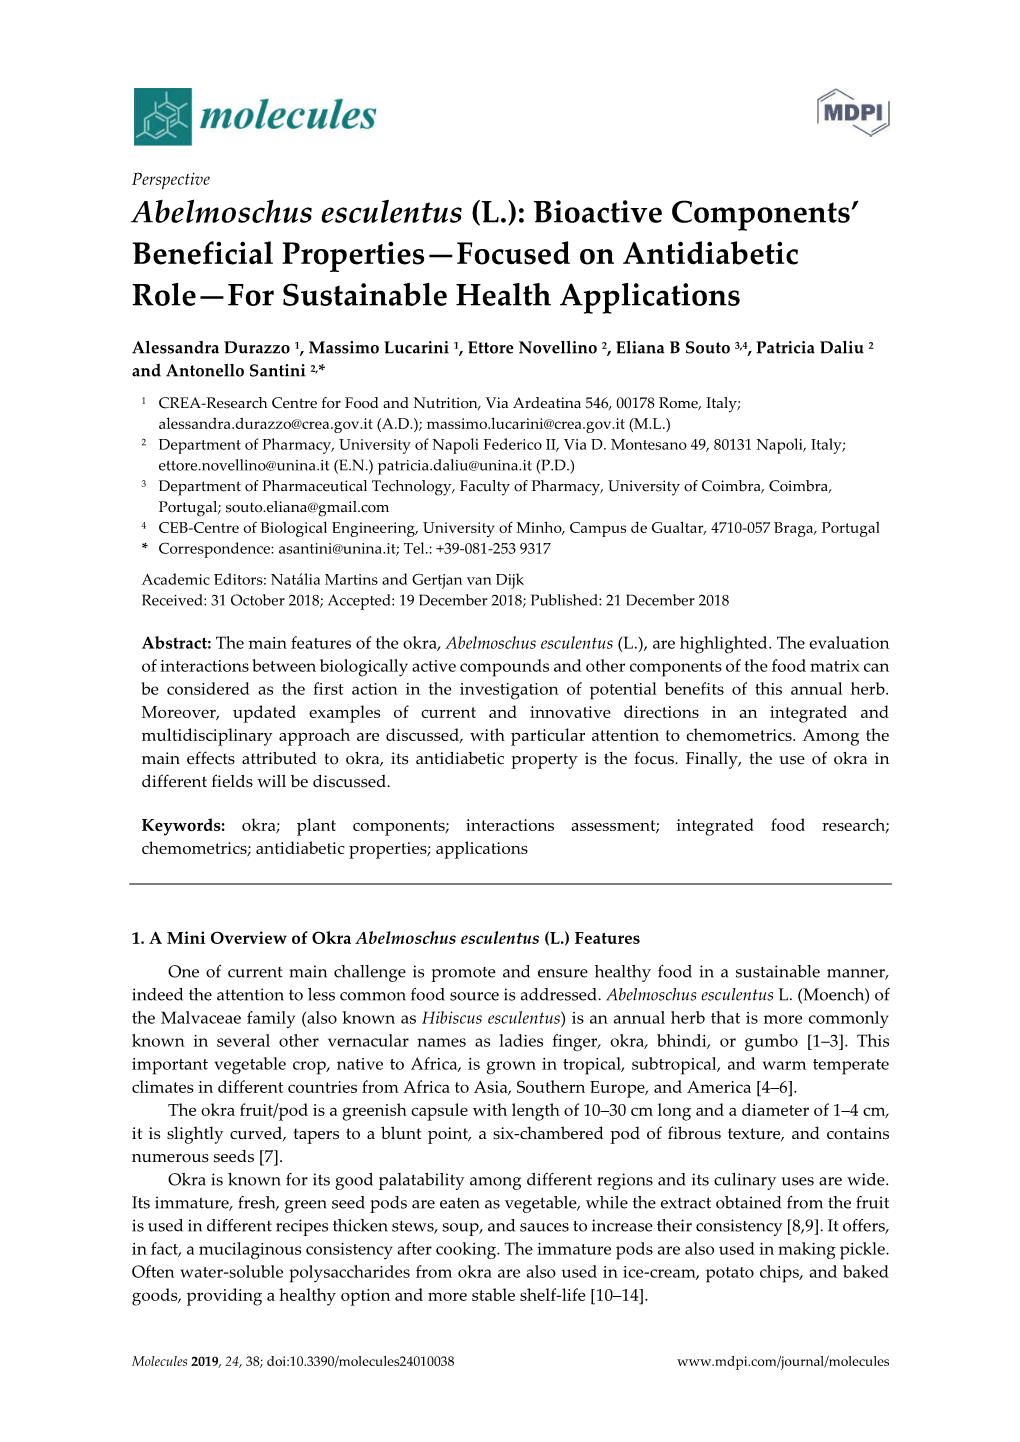 Abelmoschus Esculentus (L.): Bioactive Components' Beneficial